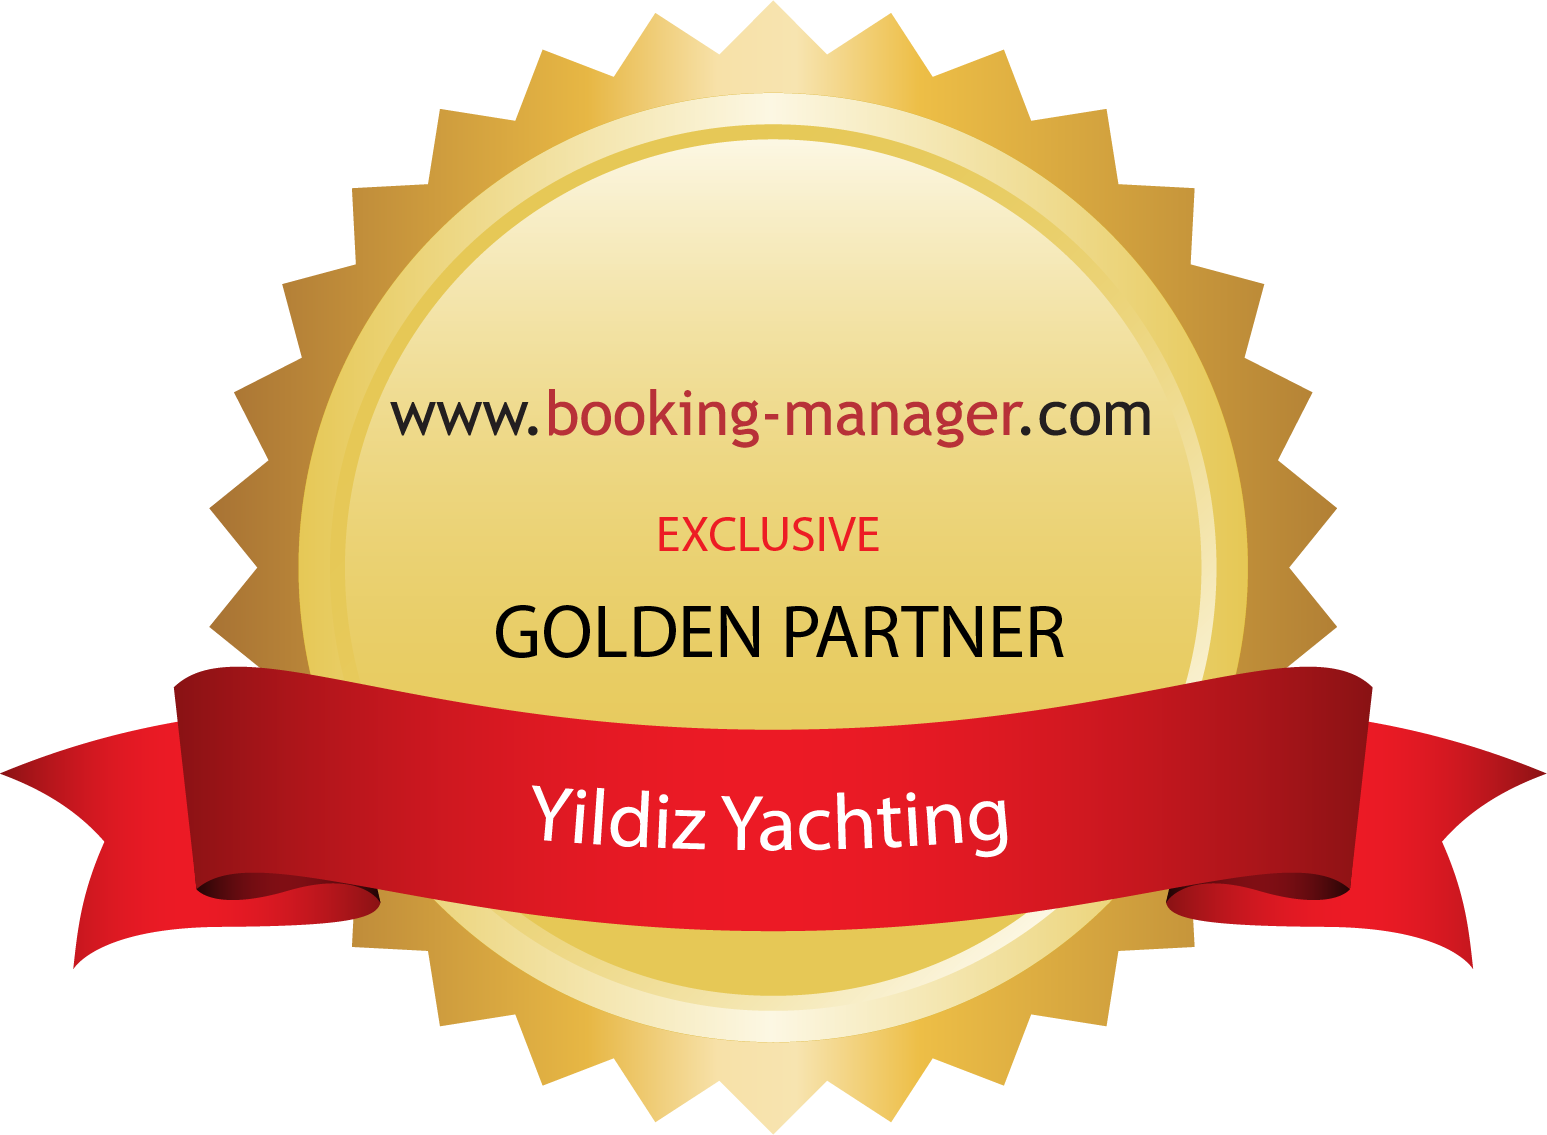 Booking Maanger Golden Partner